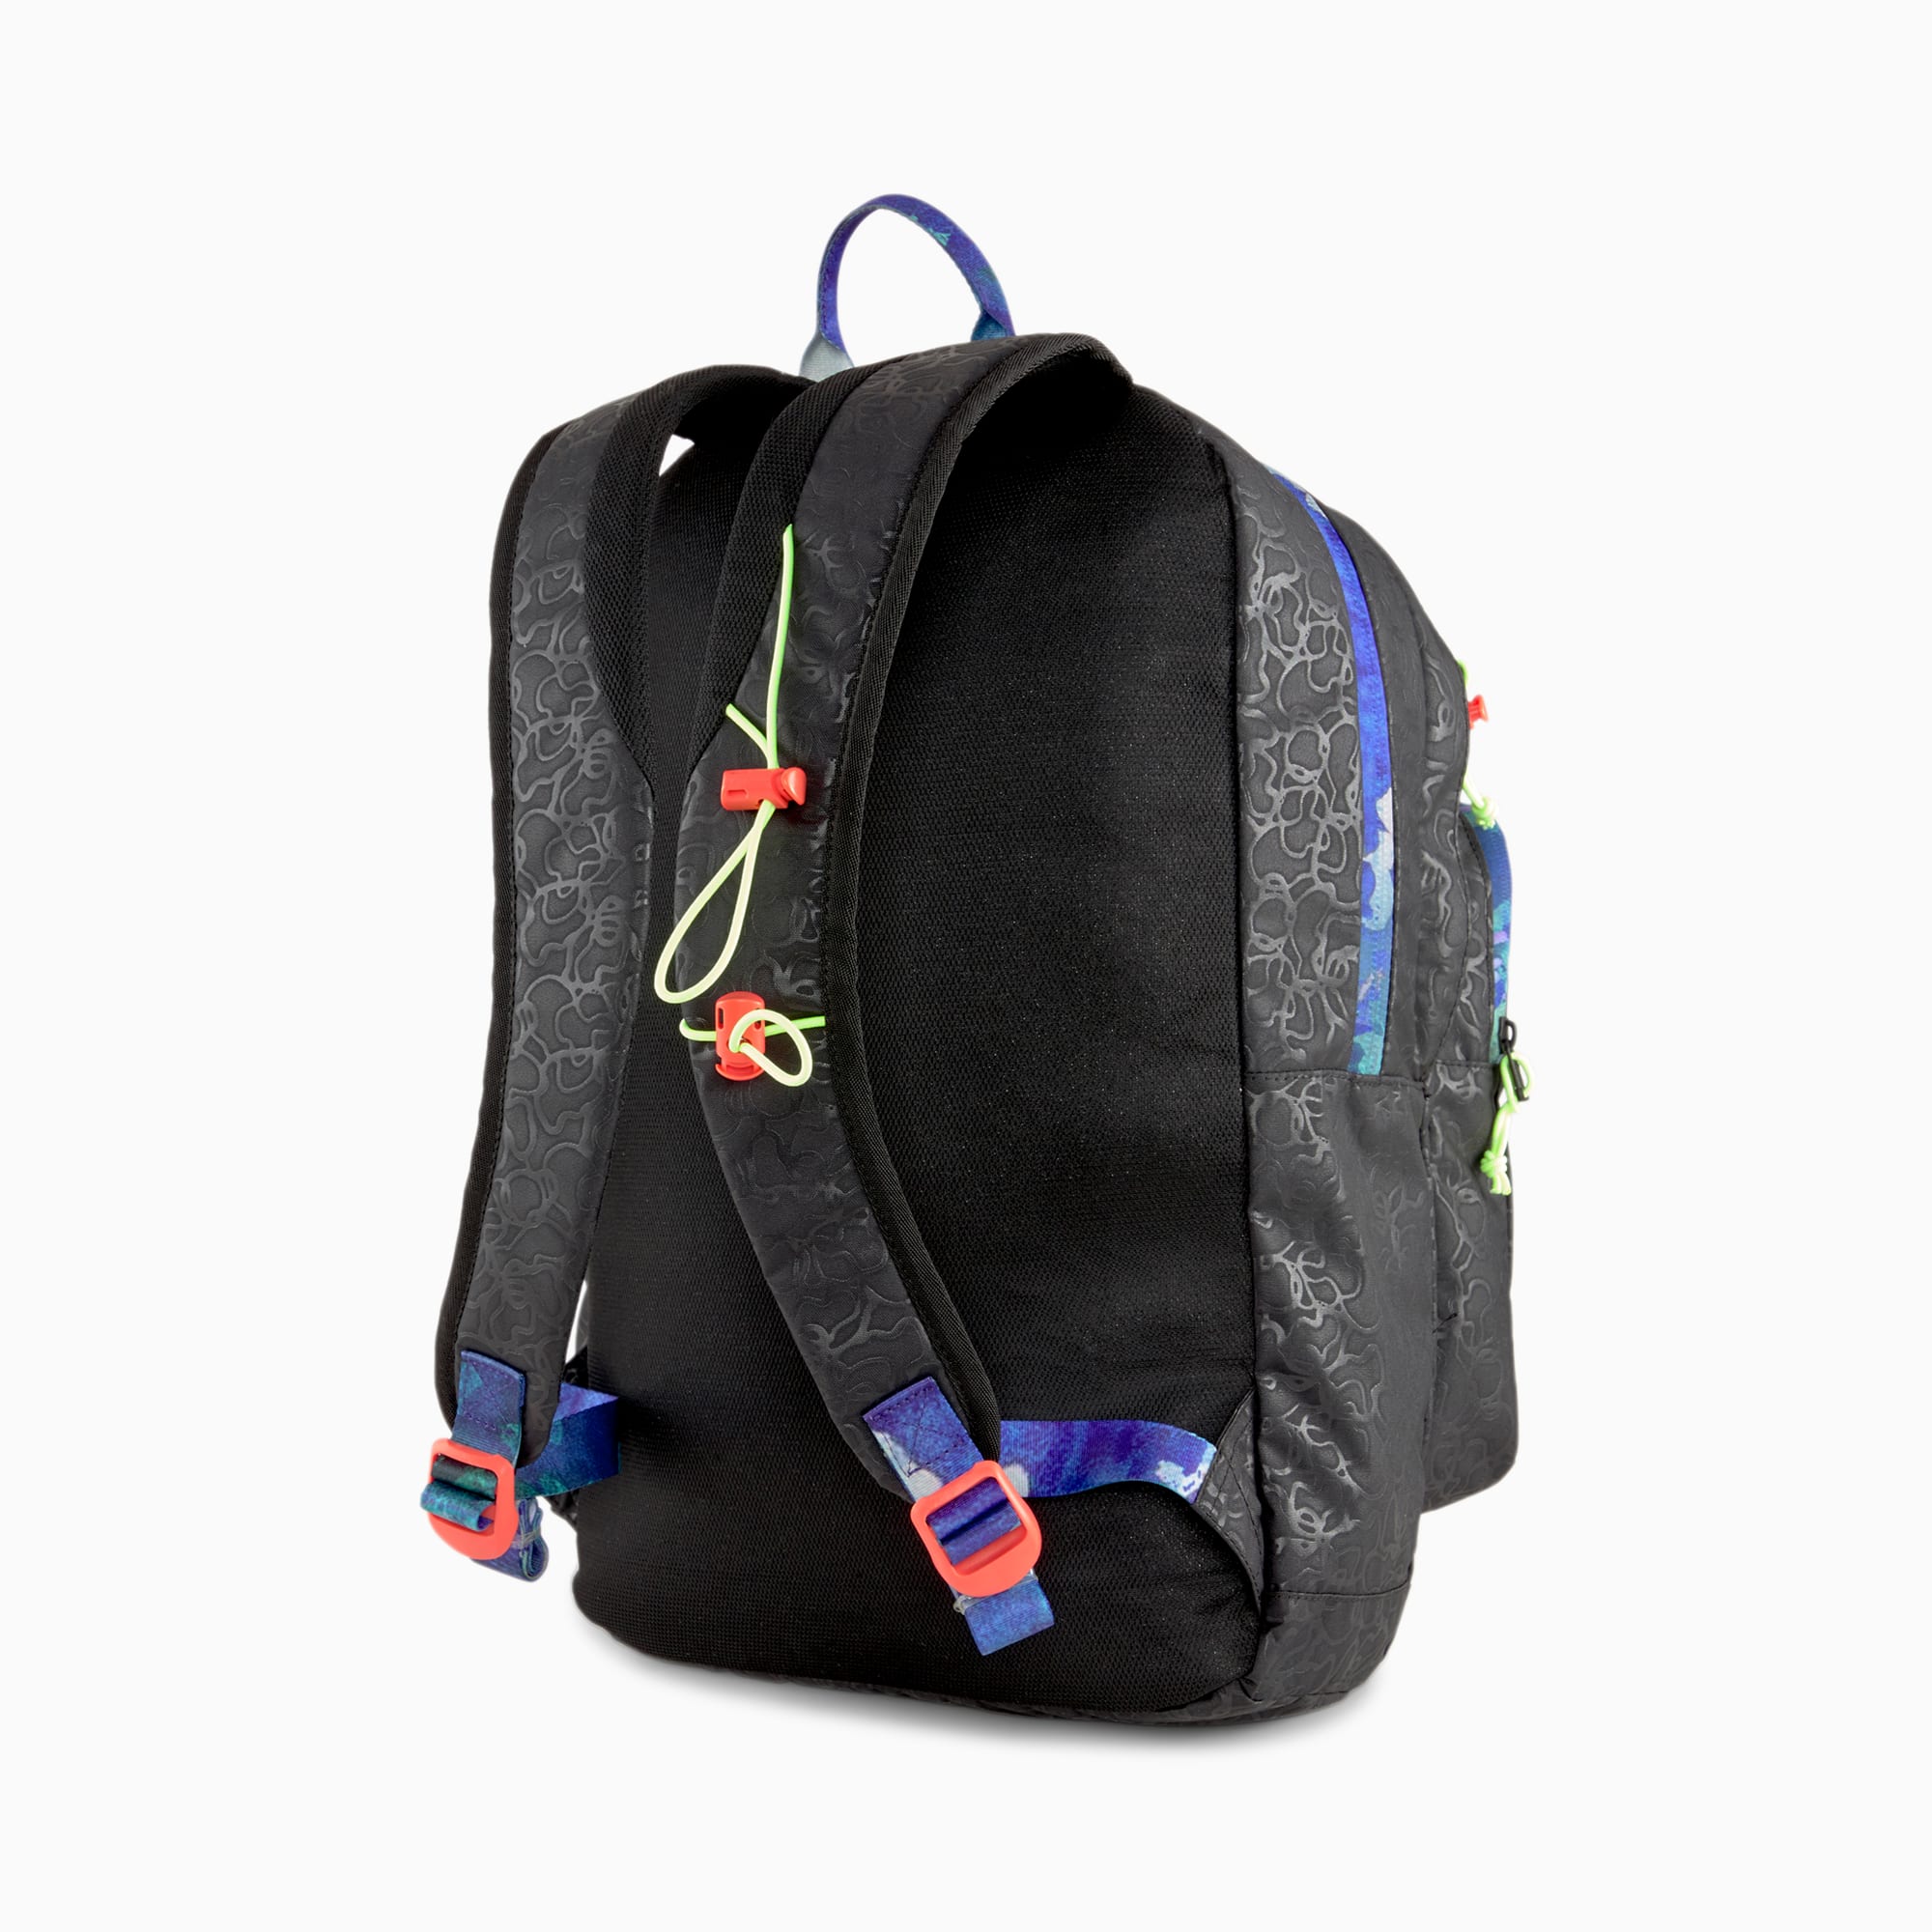 puma eco backpack